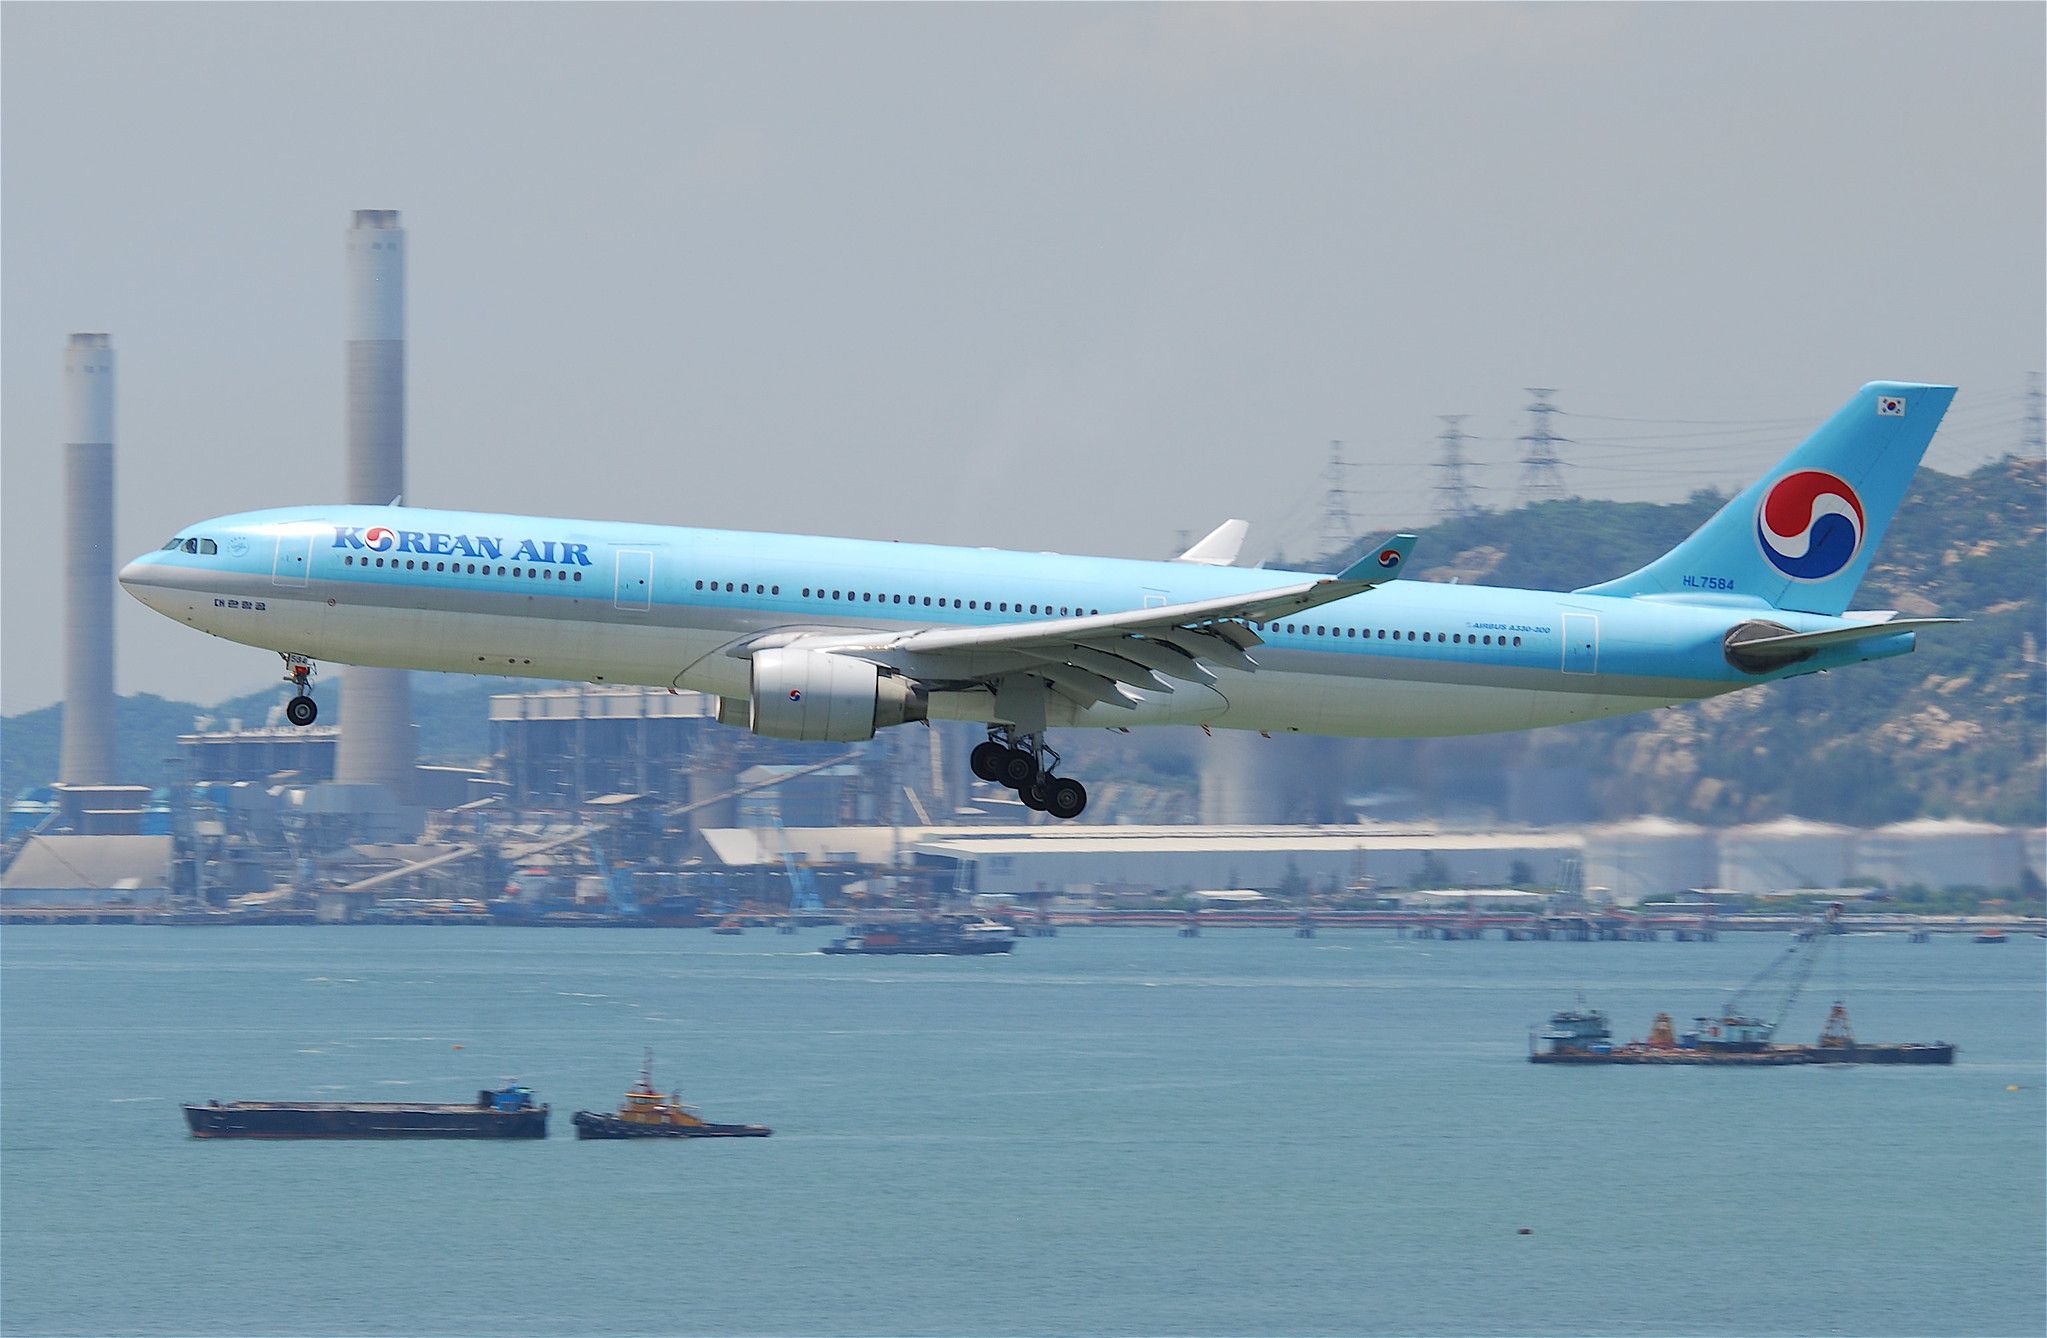 Korean Air Airbus A330 landing in Hong Kong